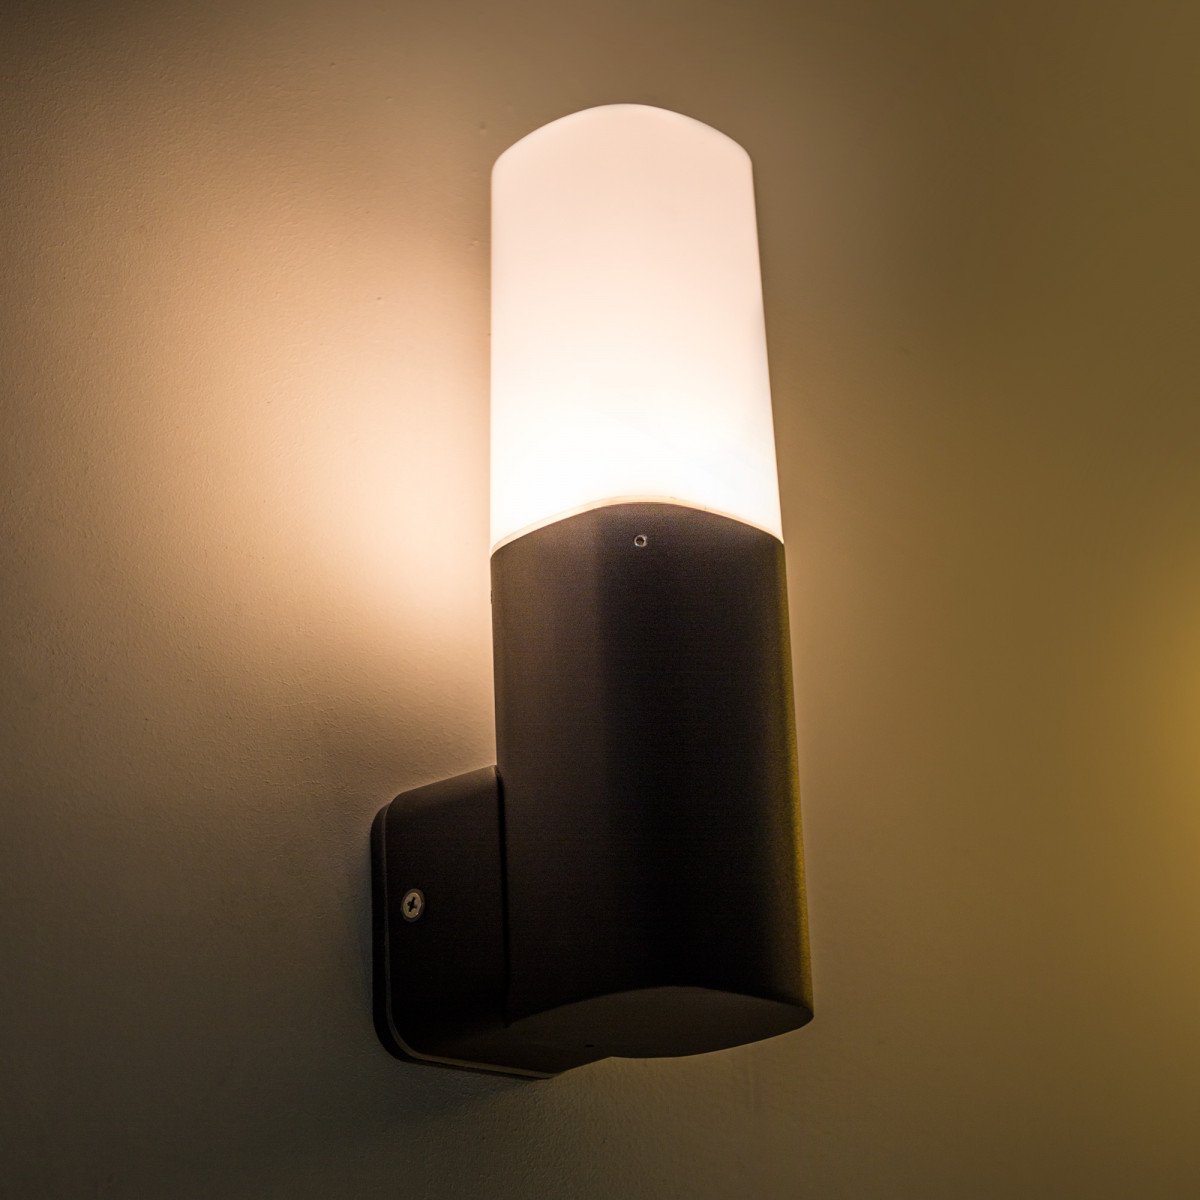 Lampe de jardin Sub Wall (7562) de KS Lighting